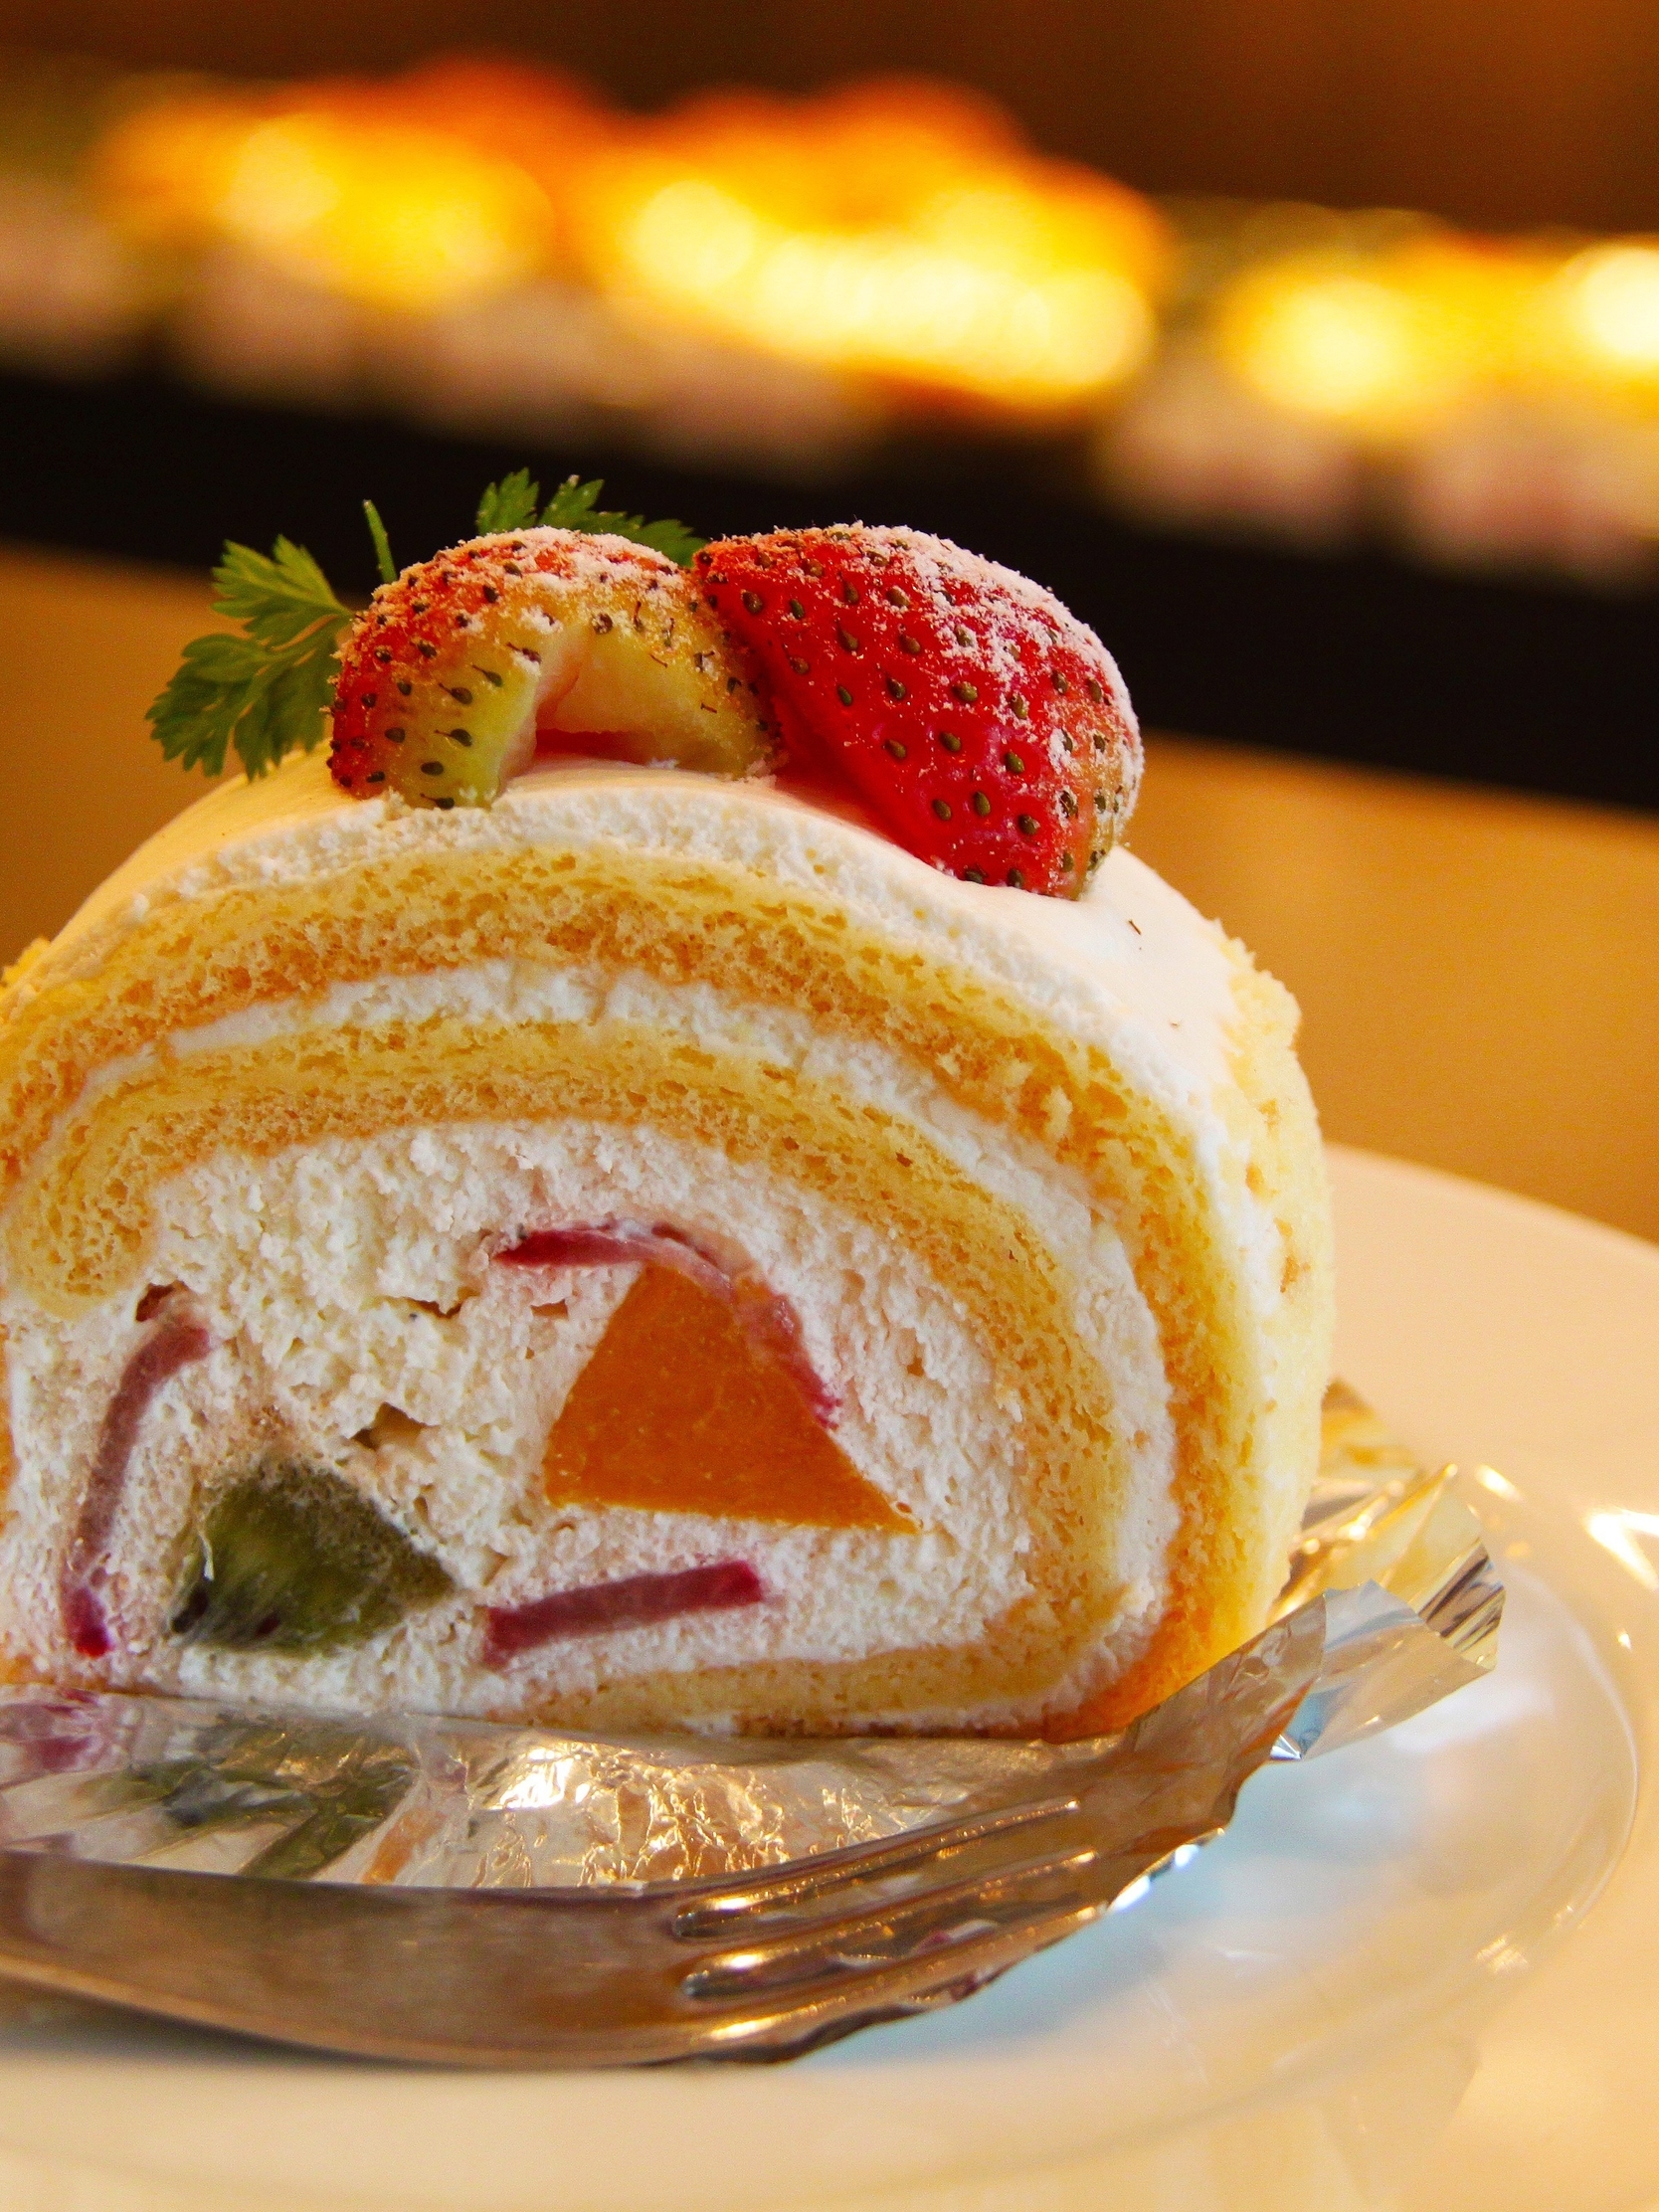 Image: Roll, dessert, berries, strawberry, cream, sweet